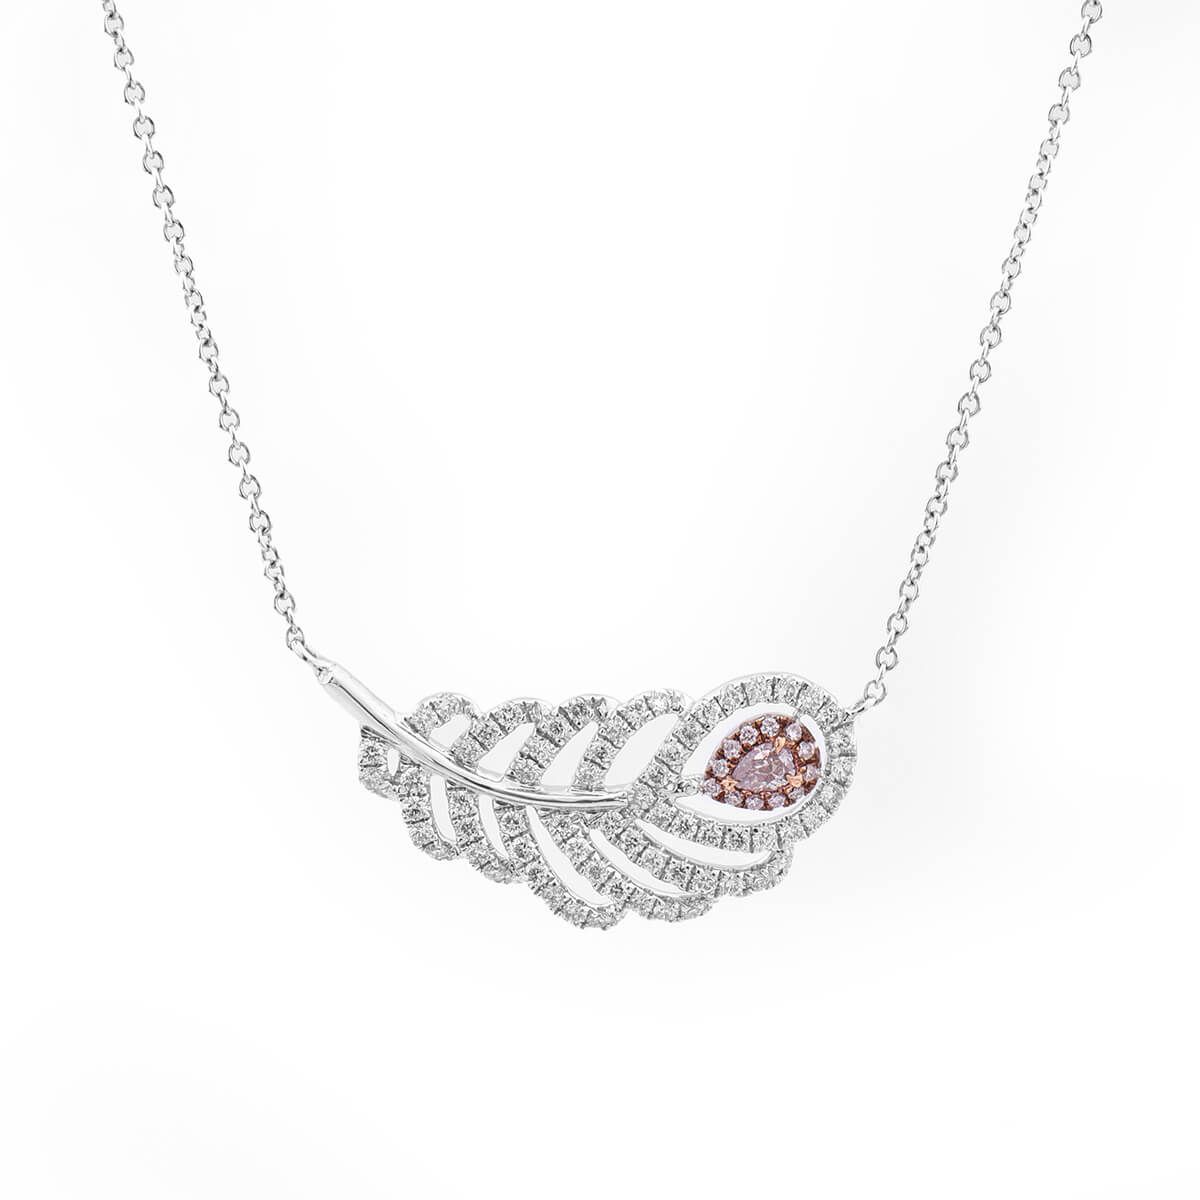 Fancy Brown Pink Diamond Necklace, 0.53 Ct. TW, Pear shape